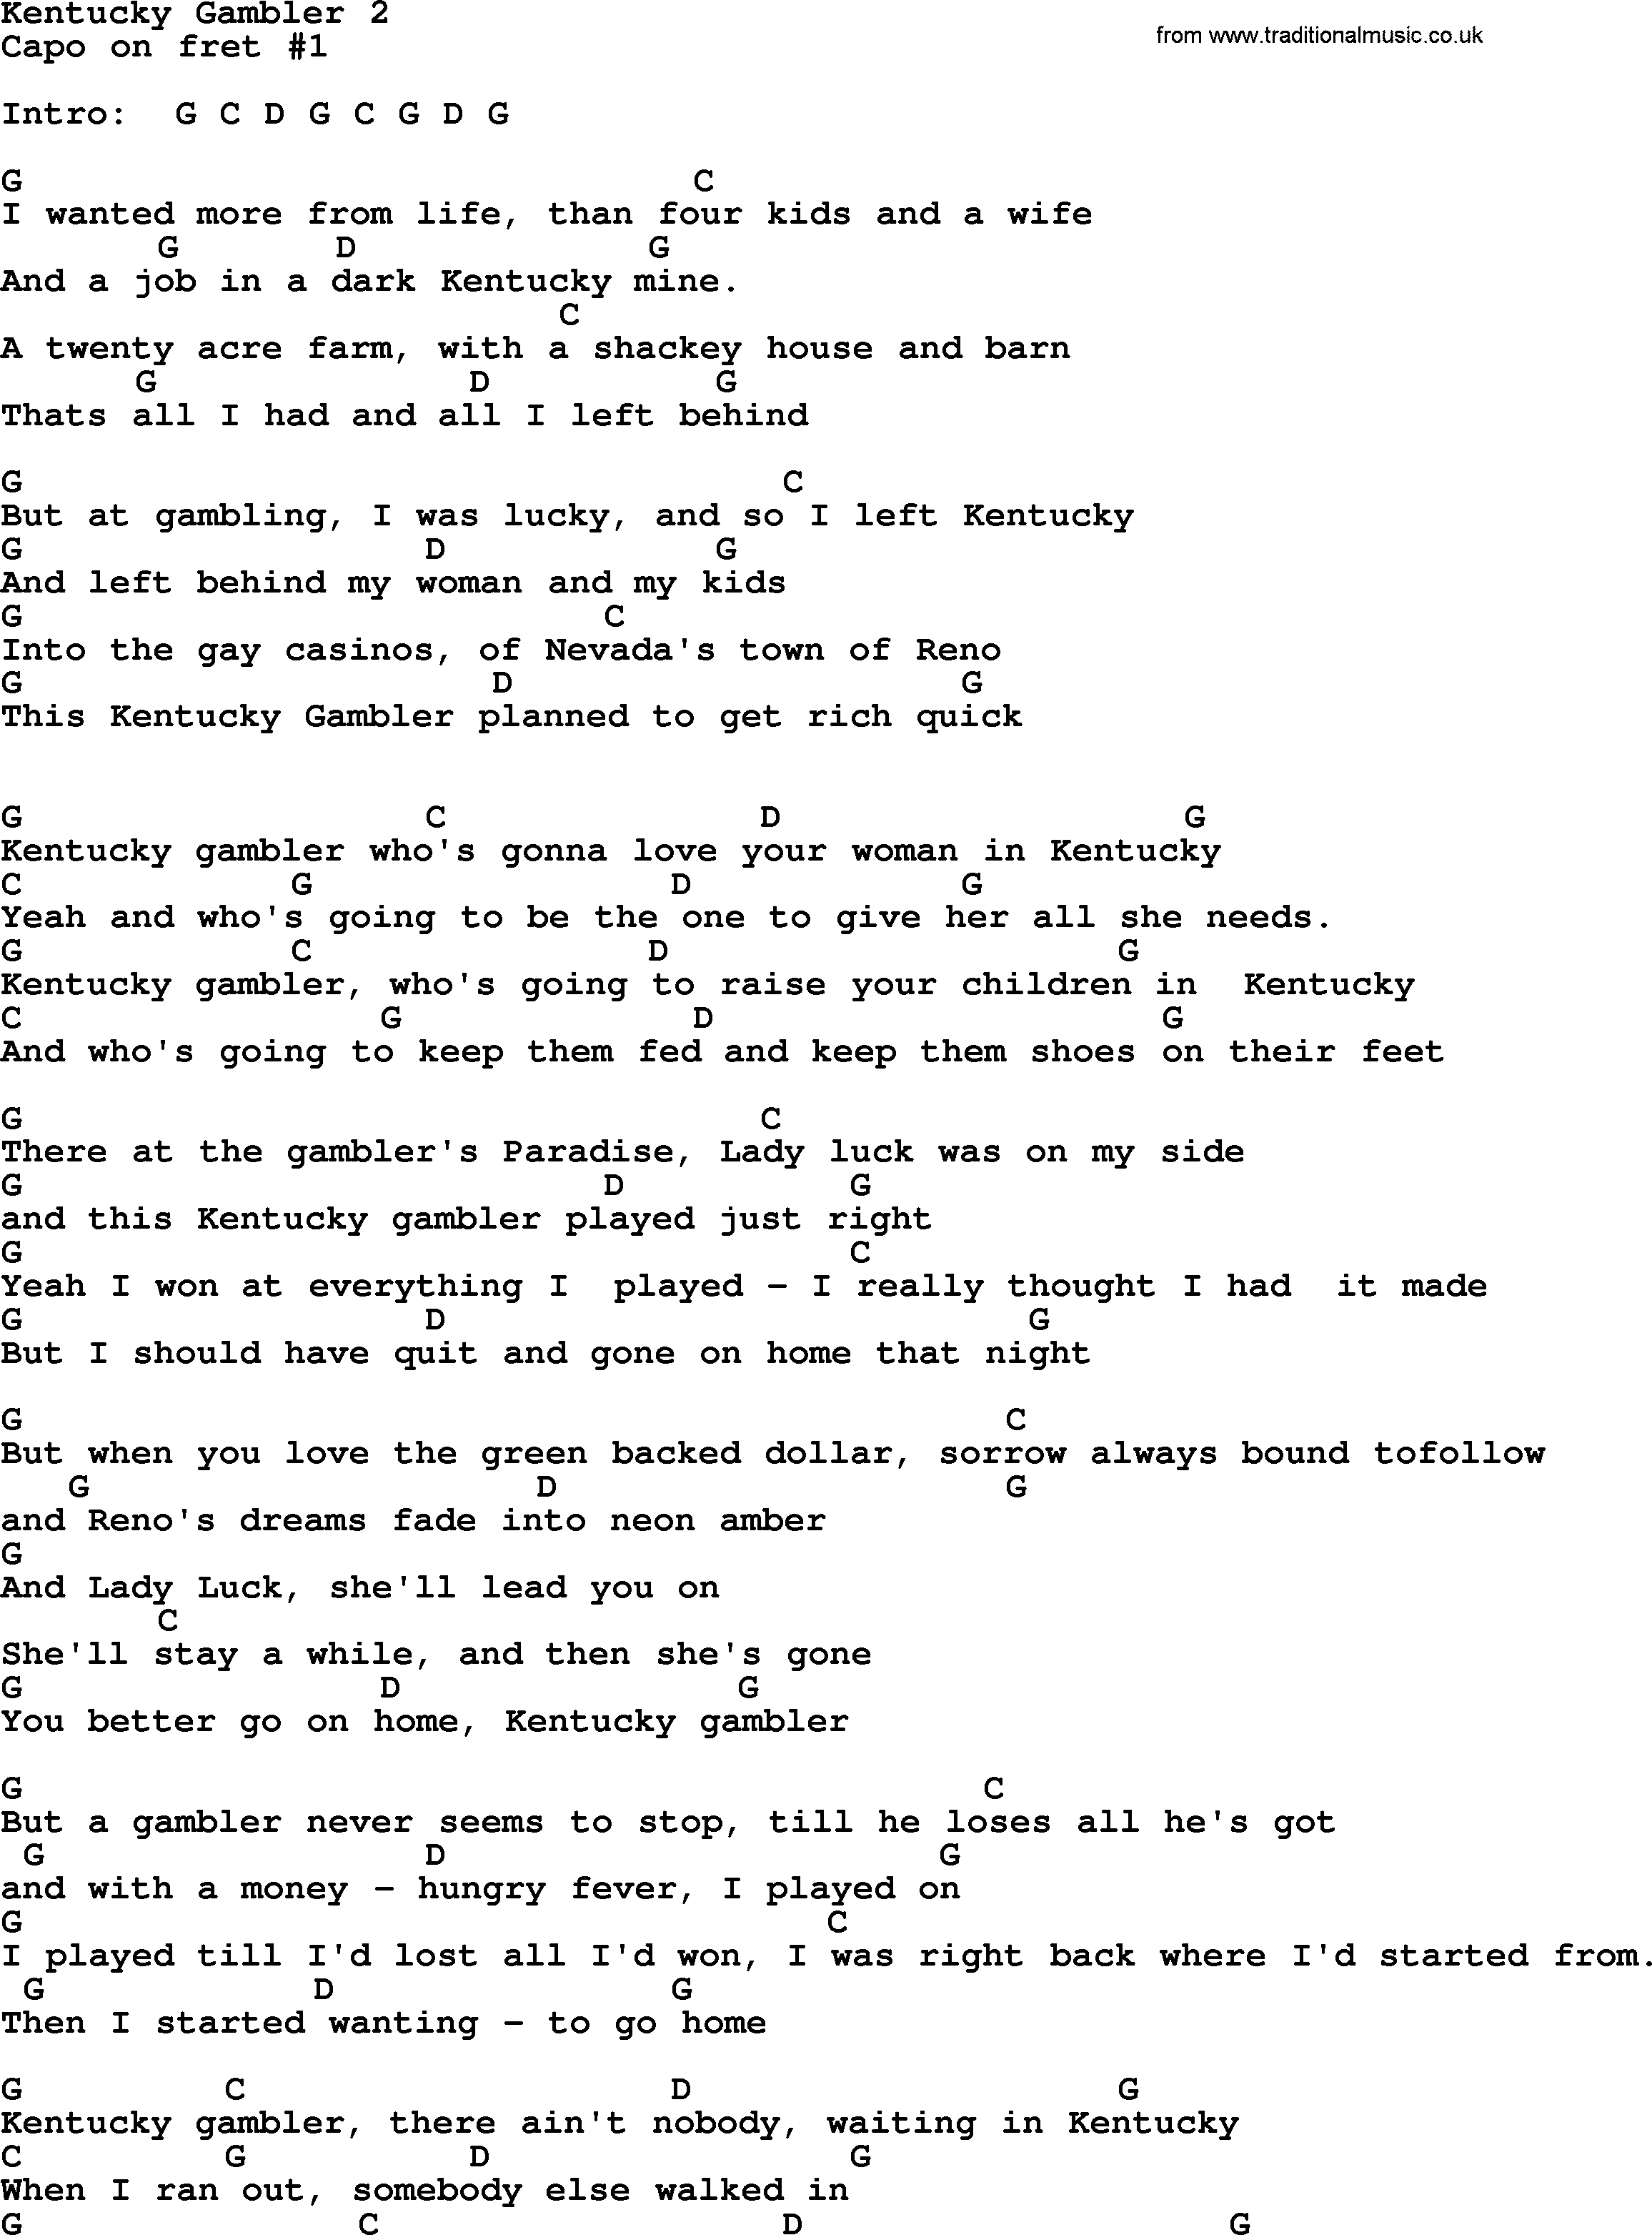 Merle Haggard song: Kentucky Gambler 2, lyrics and chords